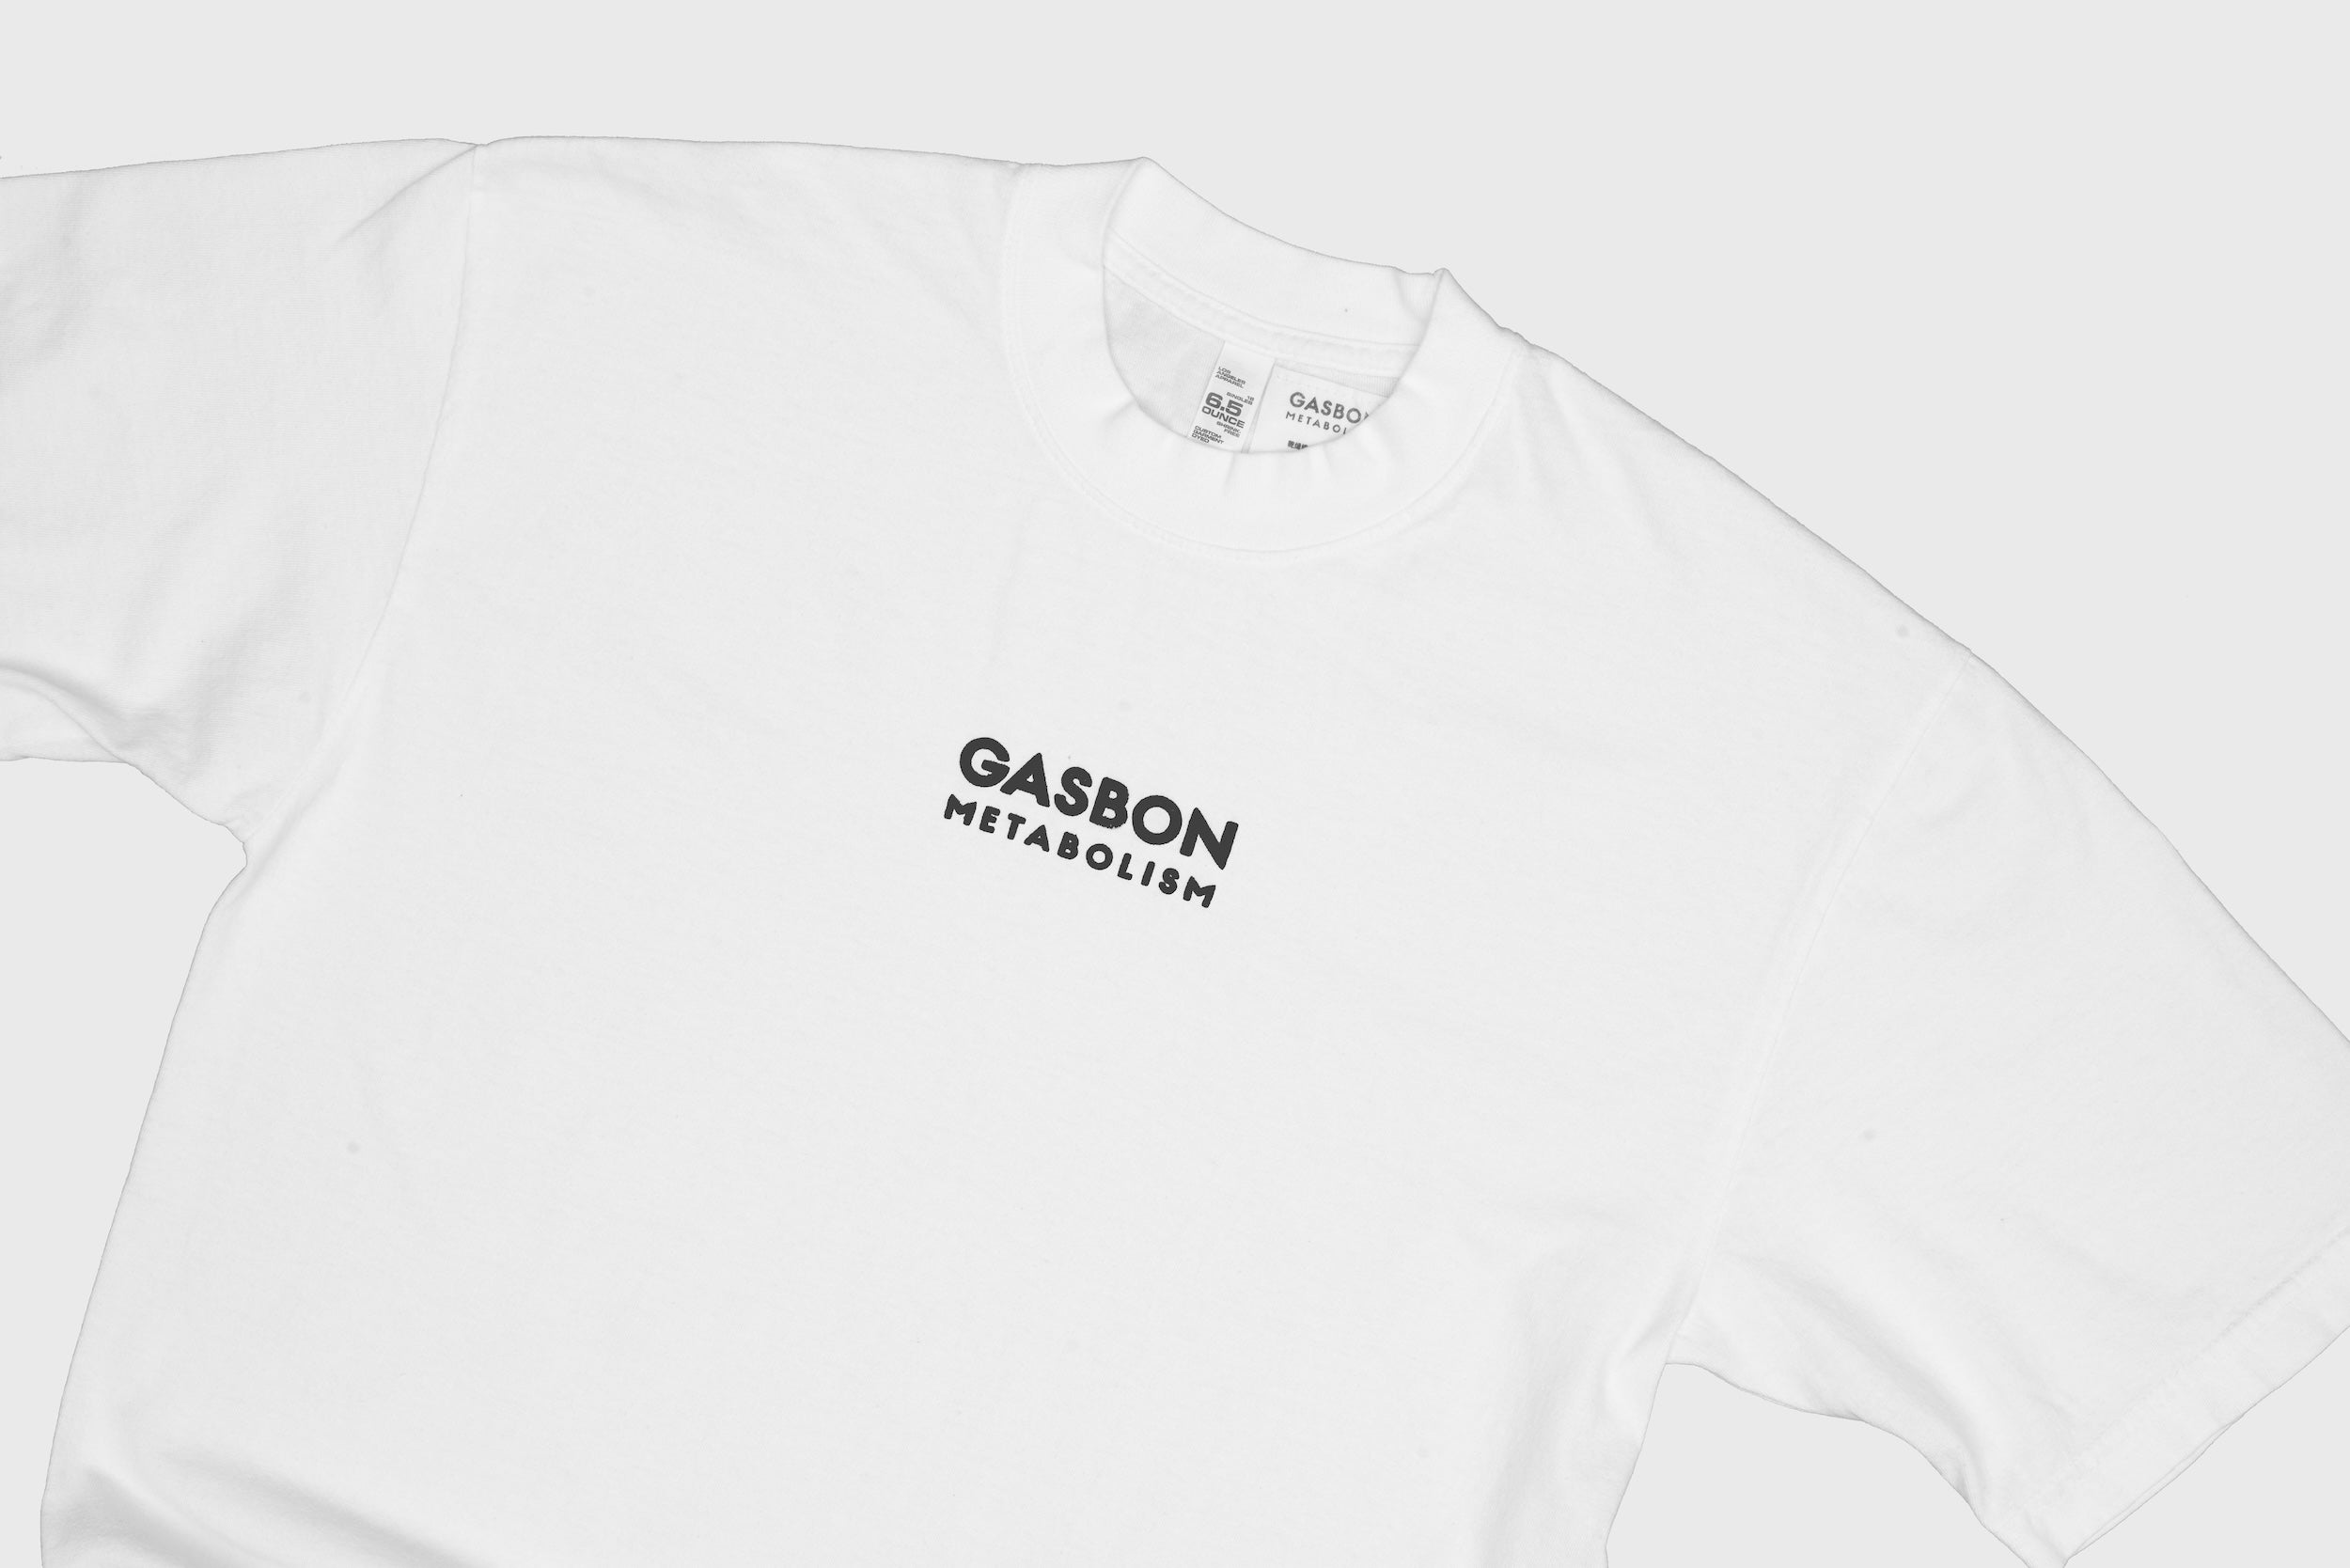 GASBON T-shirt 【5 colors】